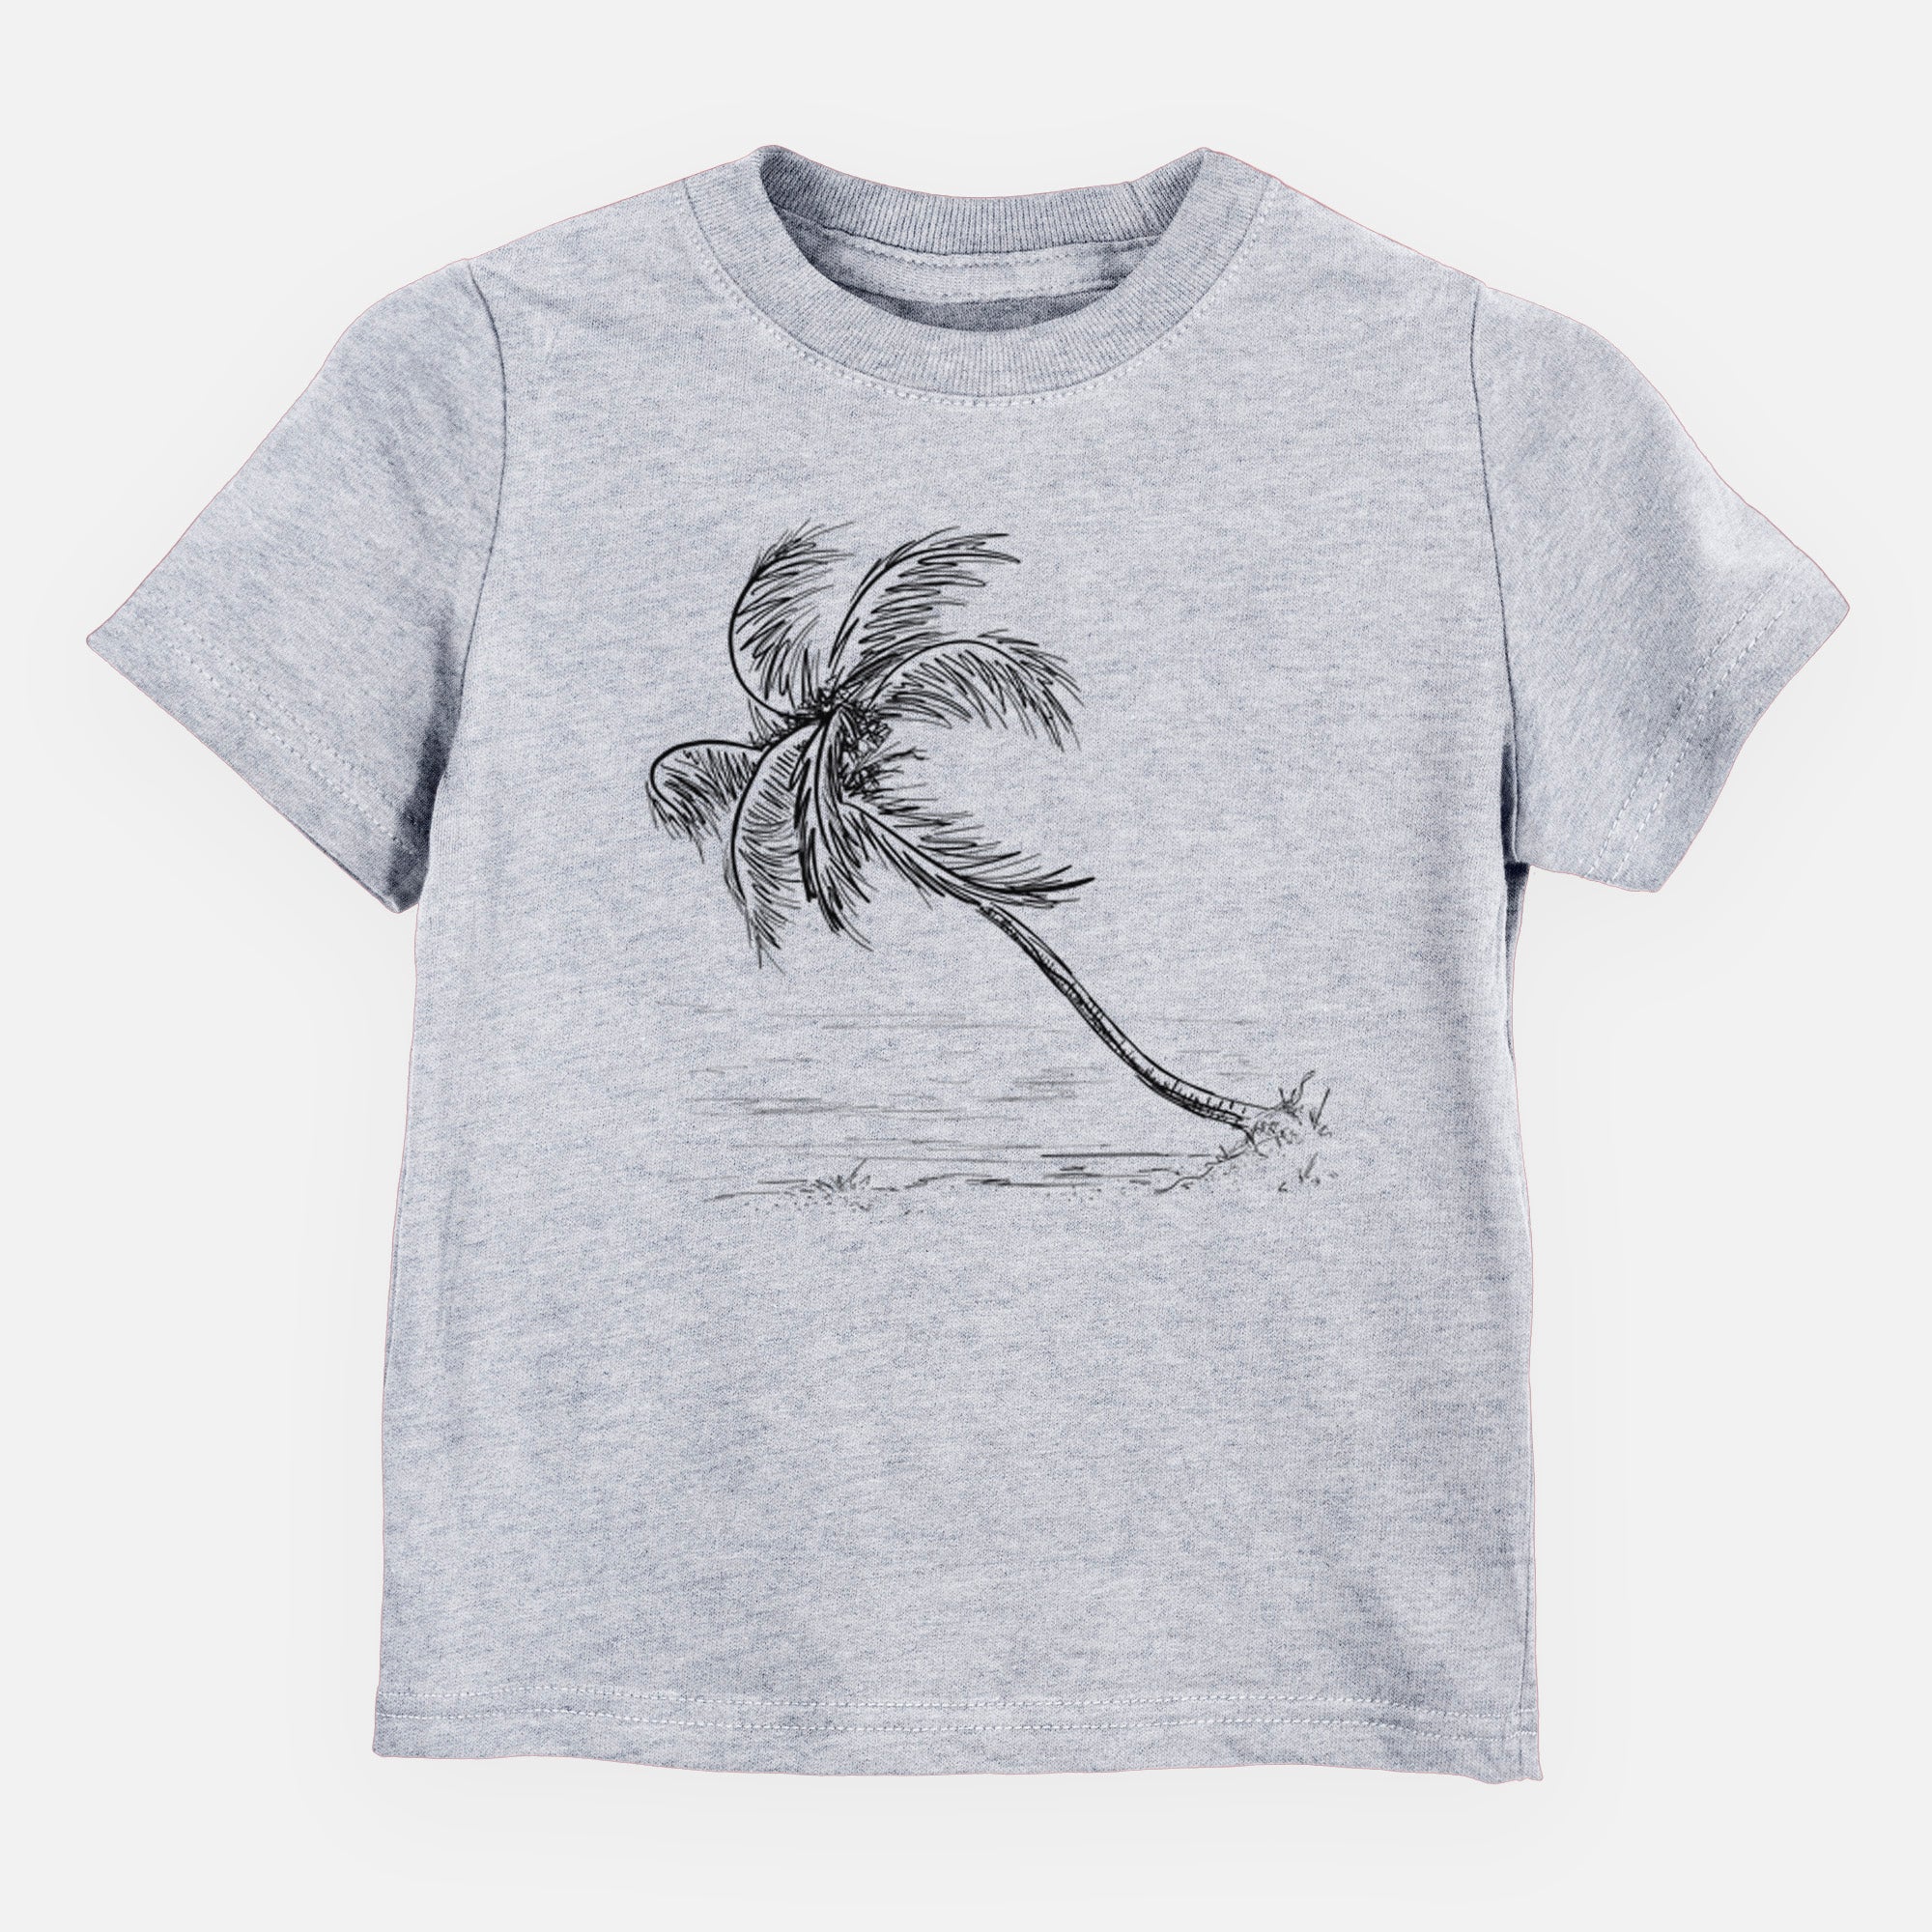 Coconut Palm - Cocos nucifera - Kids Shirt - Because Tees